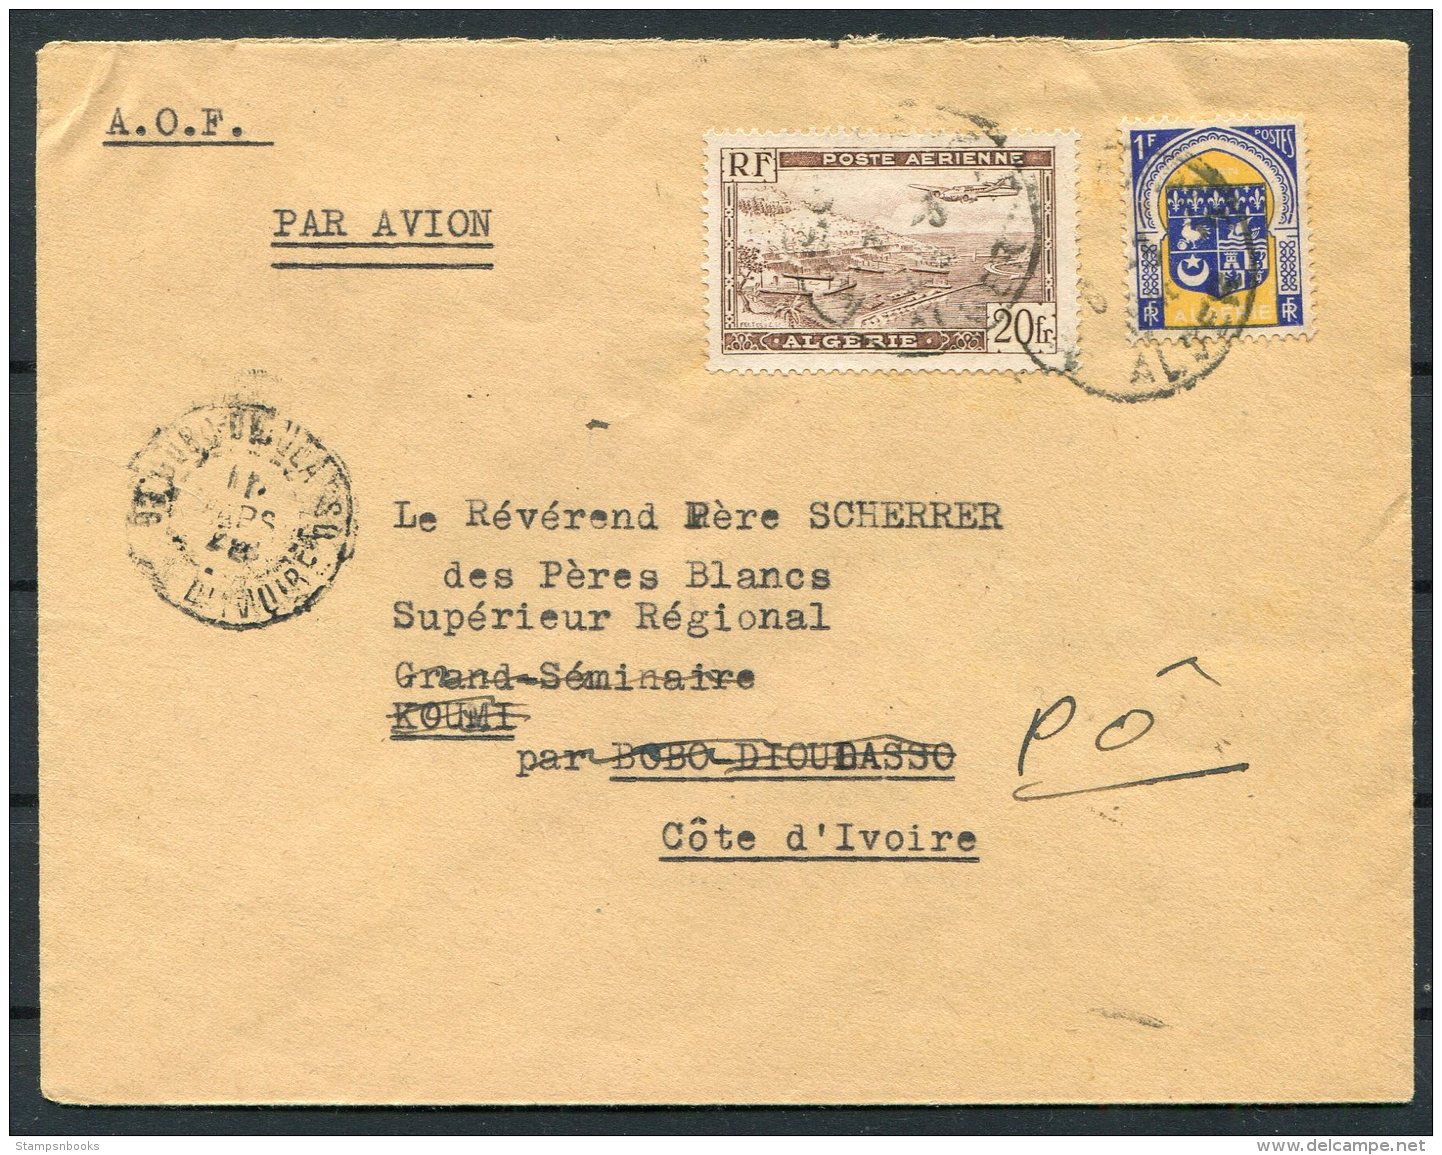 1948 Algeria A.O.F. Airmail Missionary Cover - Cathloic Mission, Po, Ivory Coast - Covers & Documents